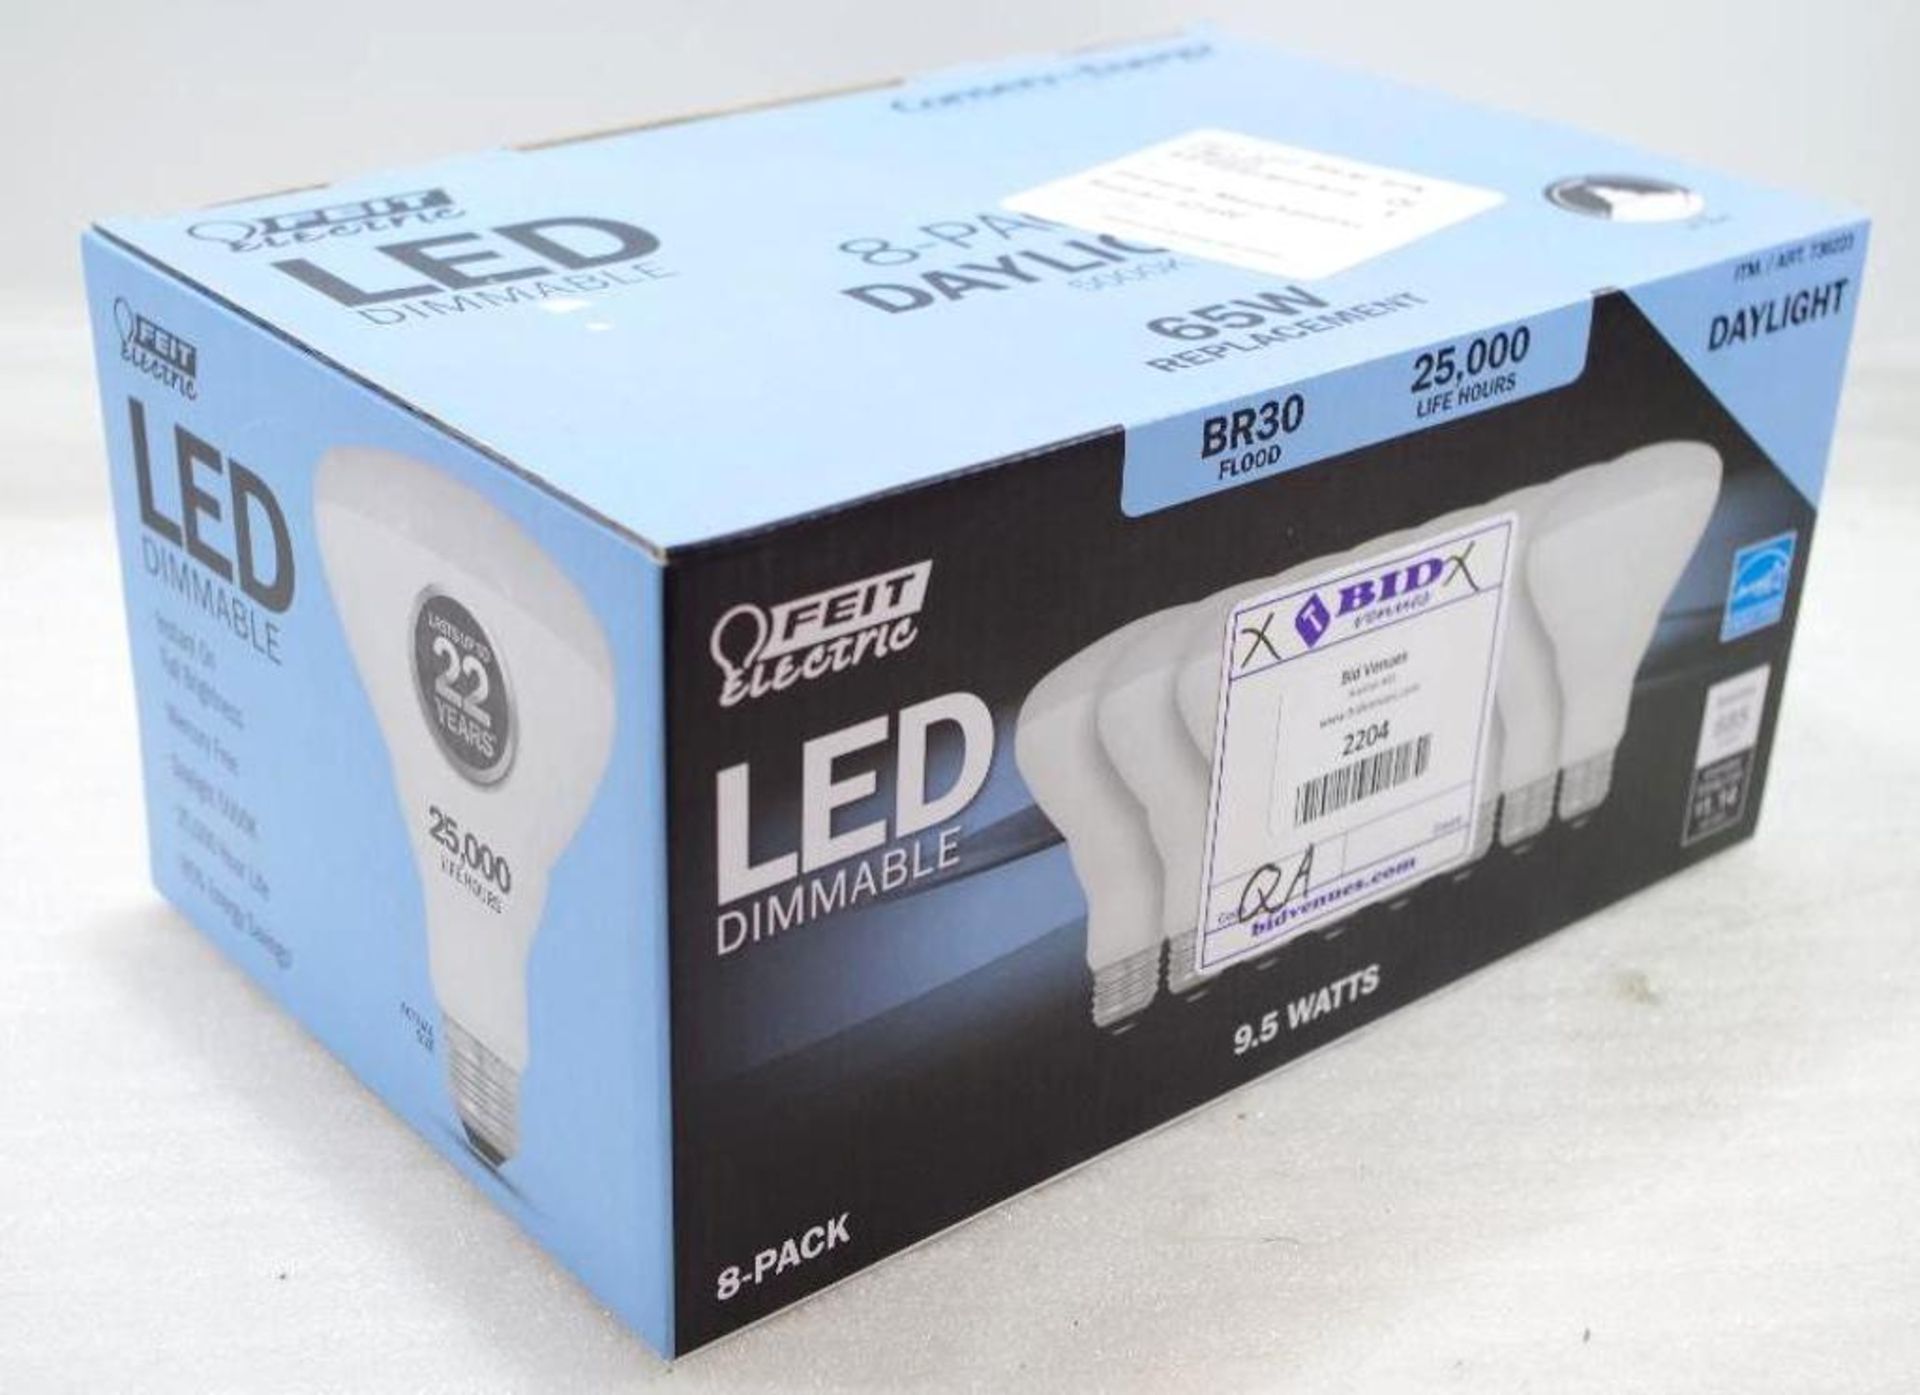 [8] FEIT 9.5 Watt LED Daylight BR30 Bulbs (1 Box of 8)